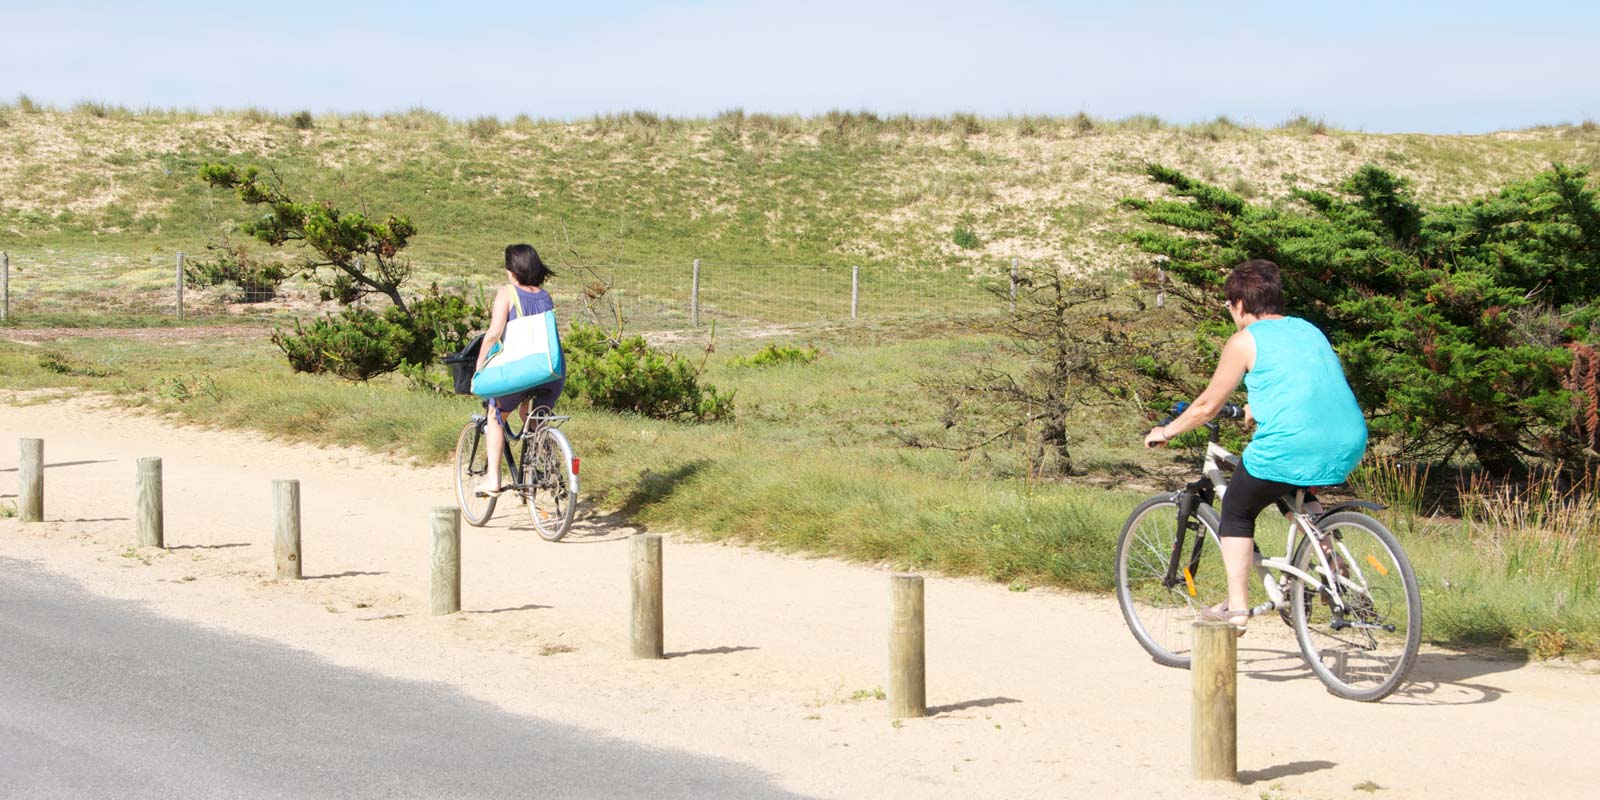 Cycling route along the dunes by the sea near the campsite in Saint-Hilaire-de-Riez